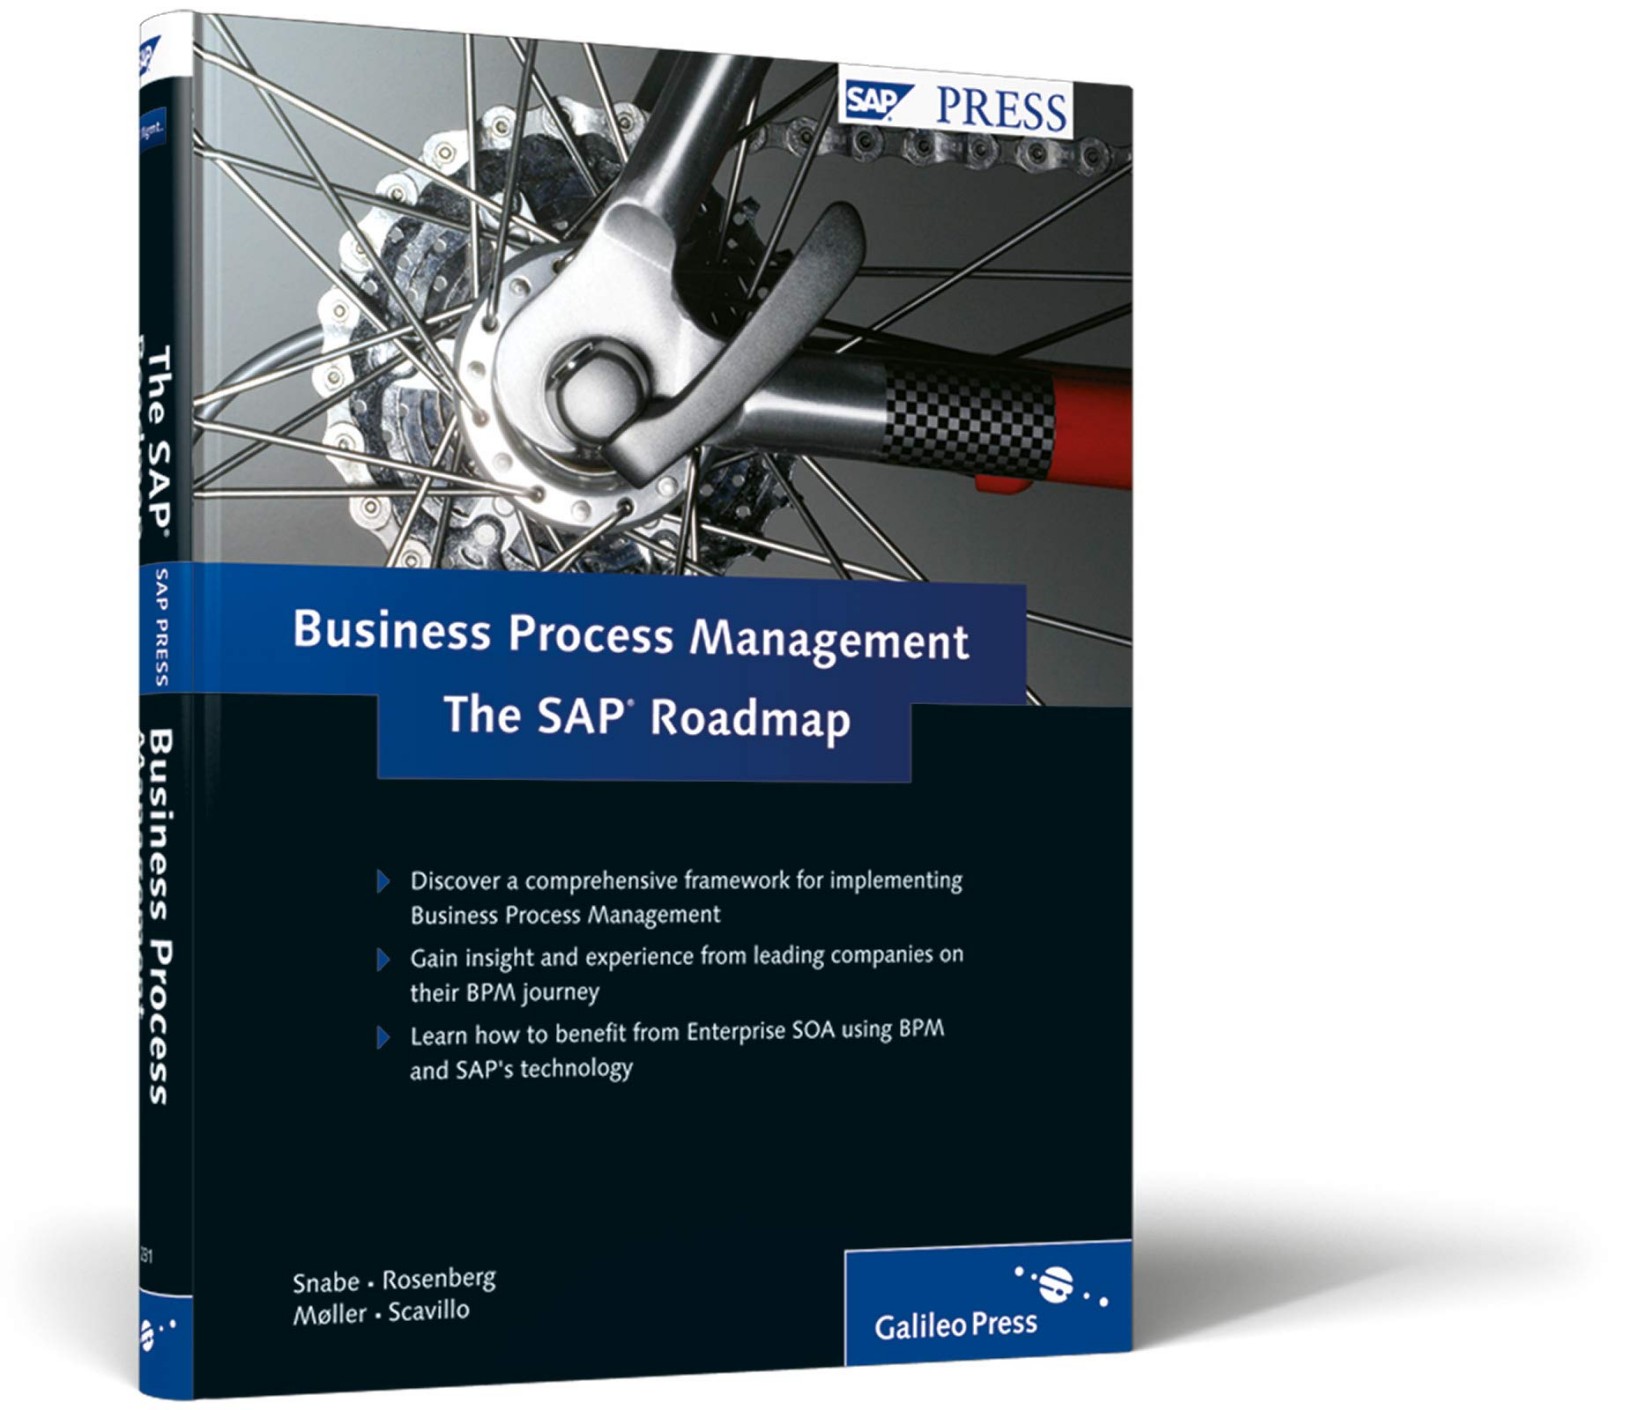 Business Process Management: The SAP Roadmap